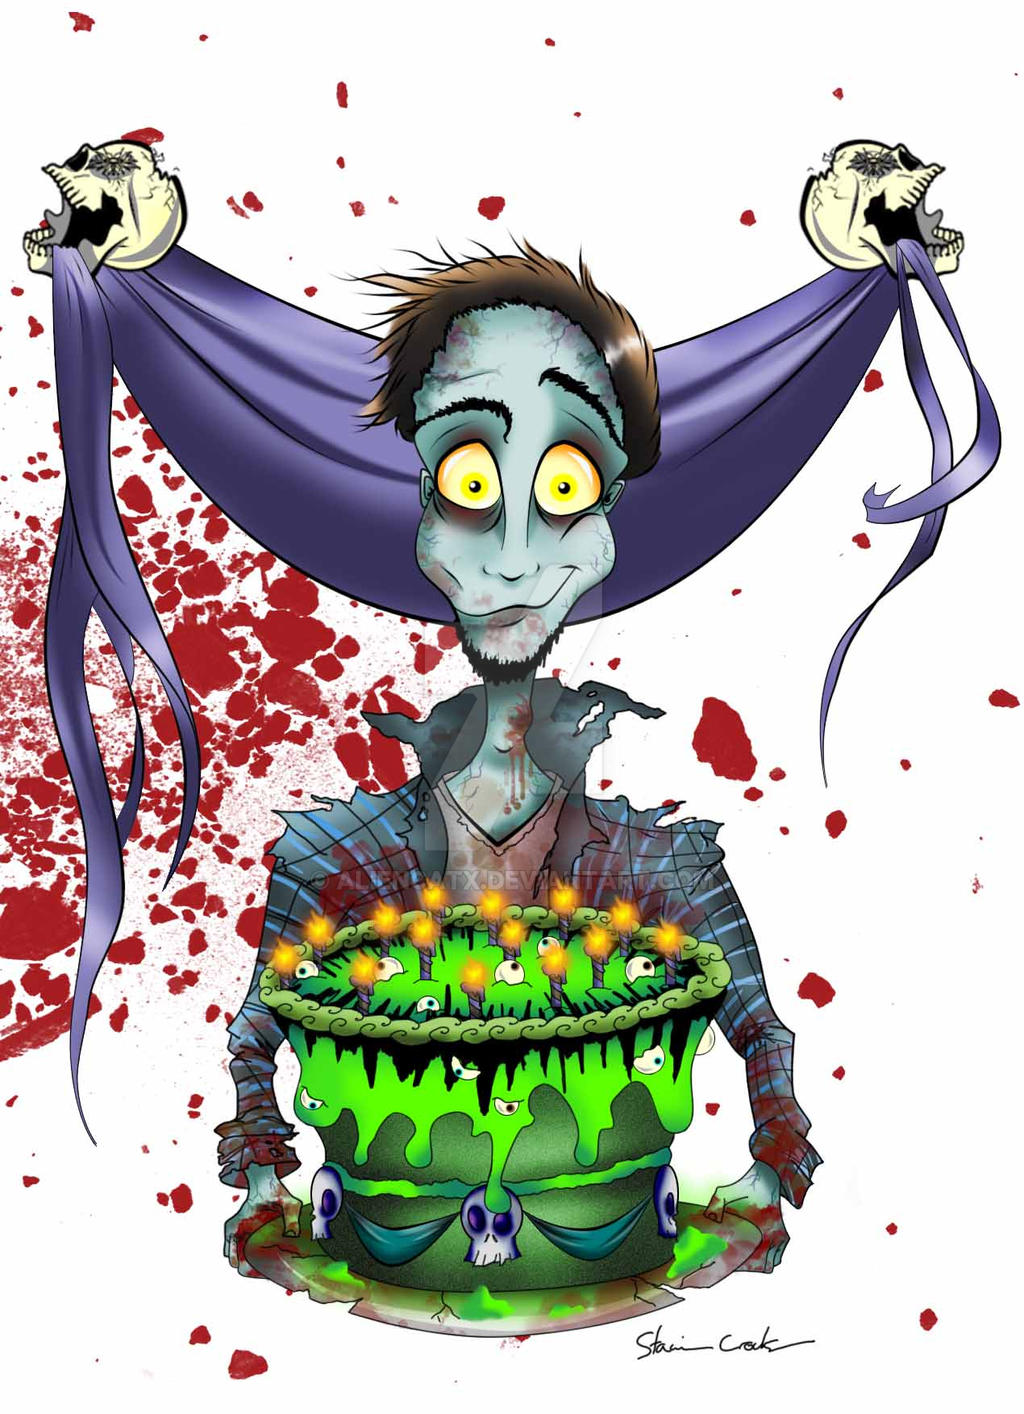 http://img03.deviantart.net/db18/i/2015/111/6/2/joey_the_zombie_birthday_card_by_aliencatx-d64twyz.jpg